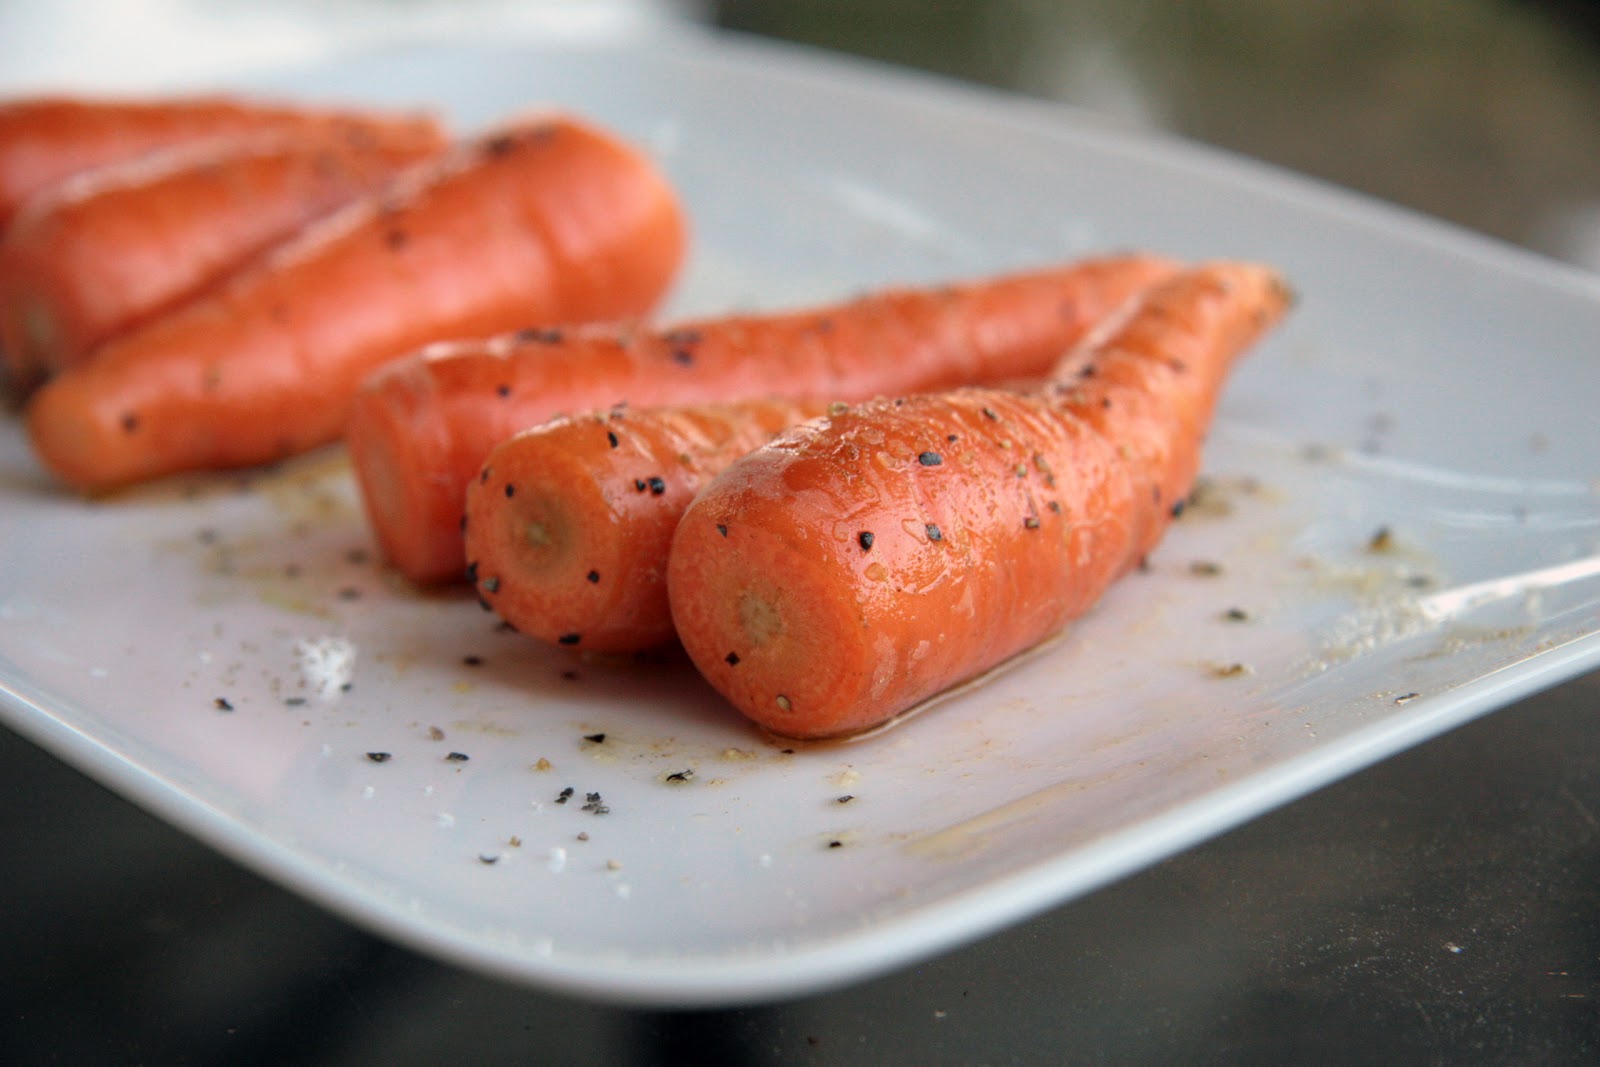 Seasoned baby carrots ready for grill